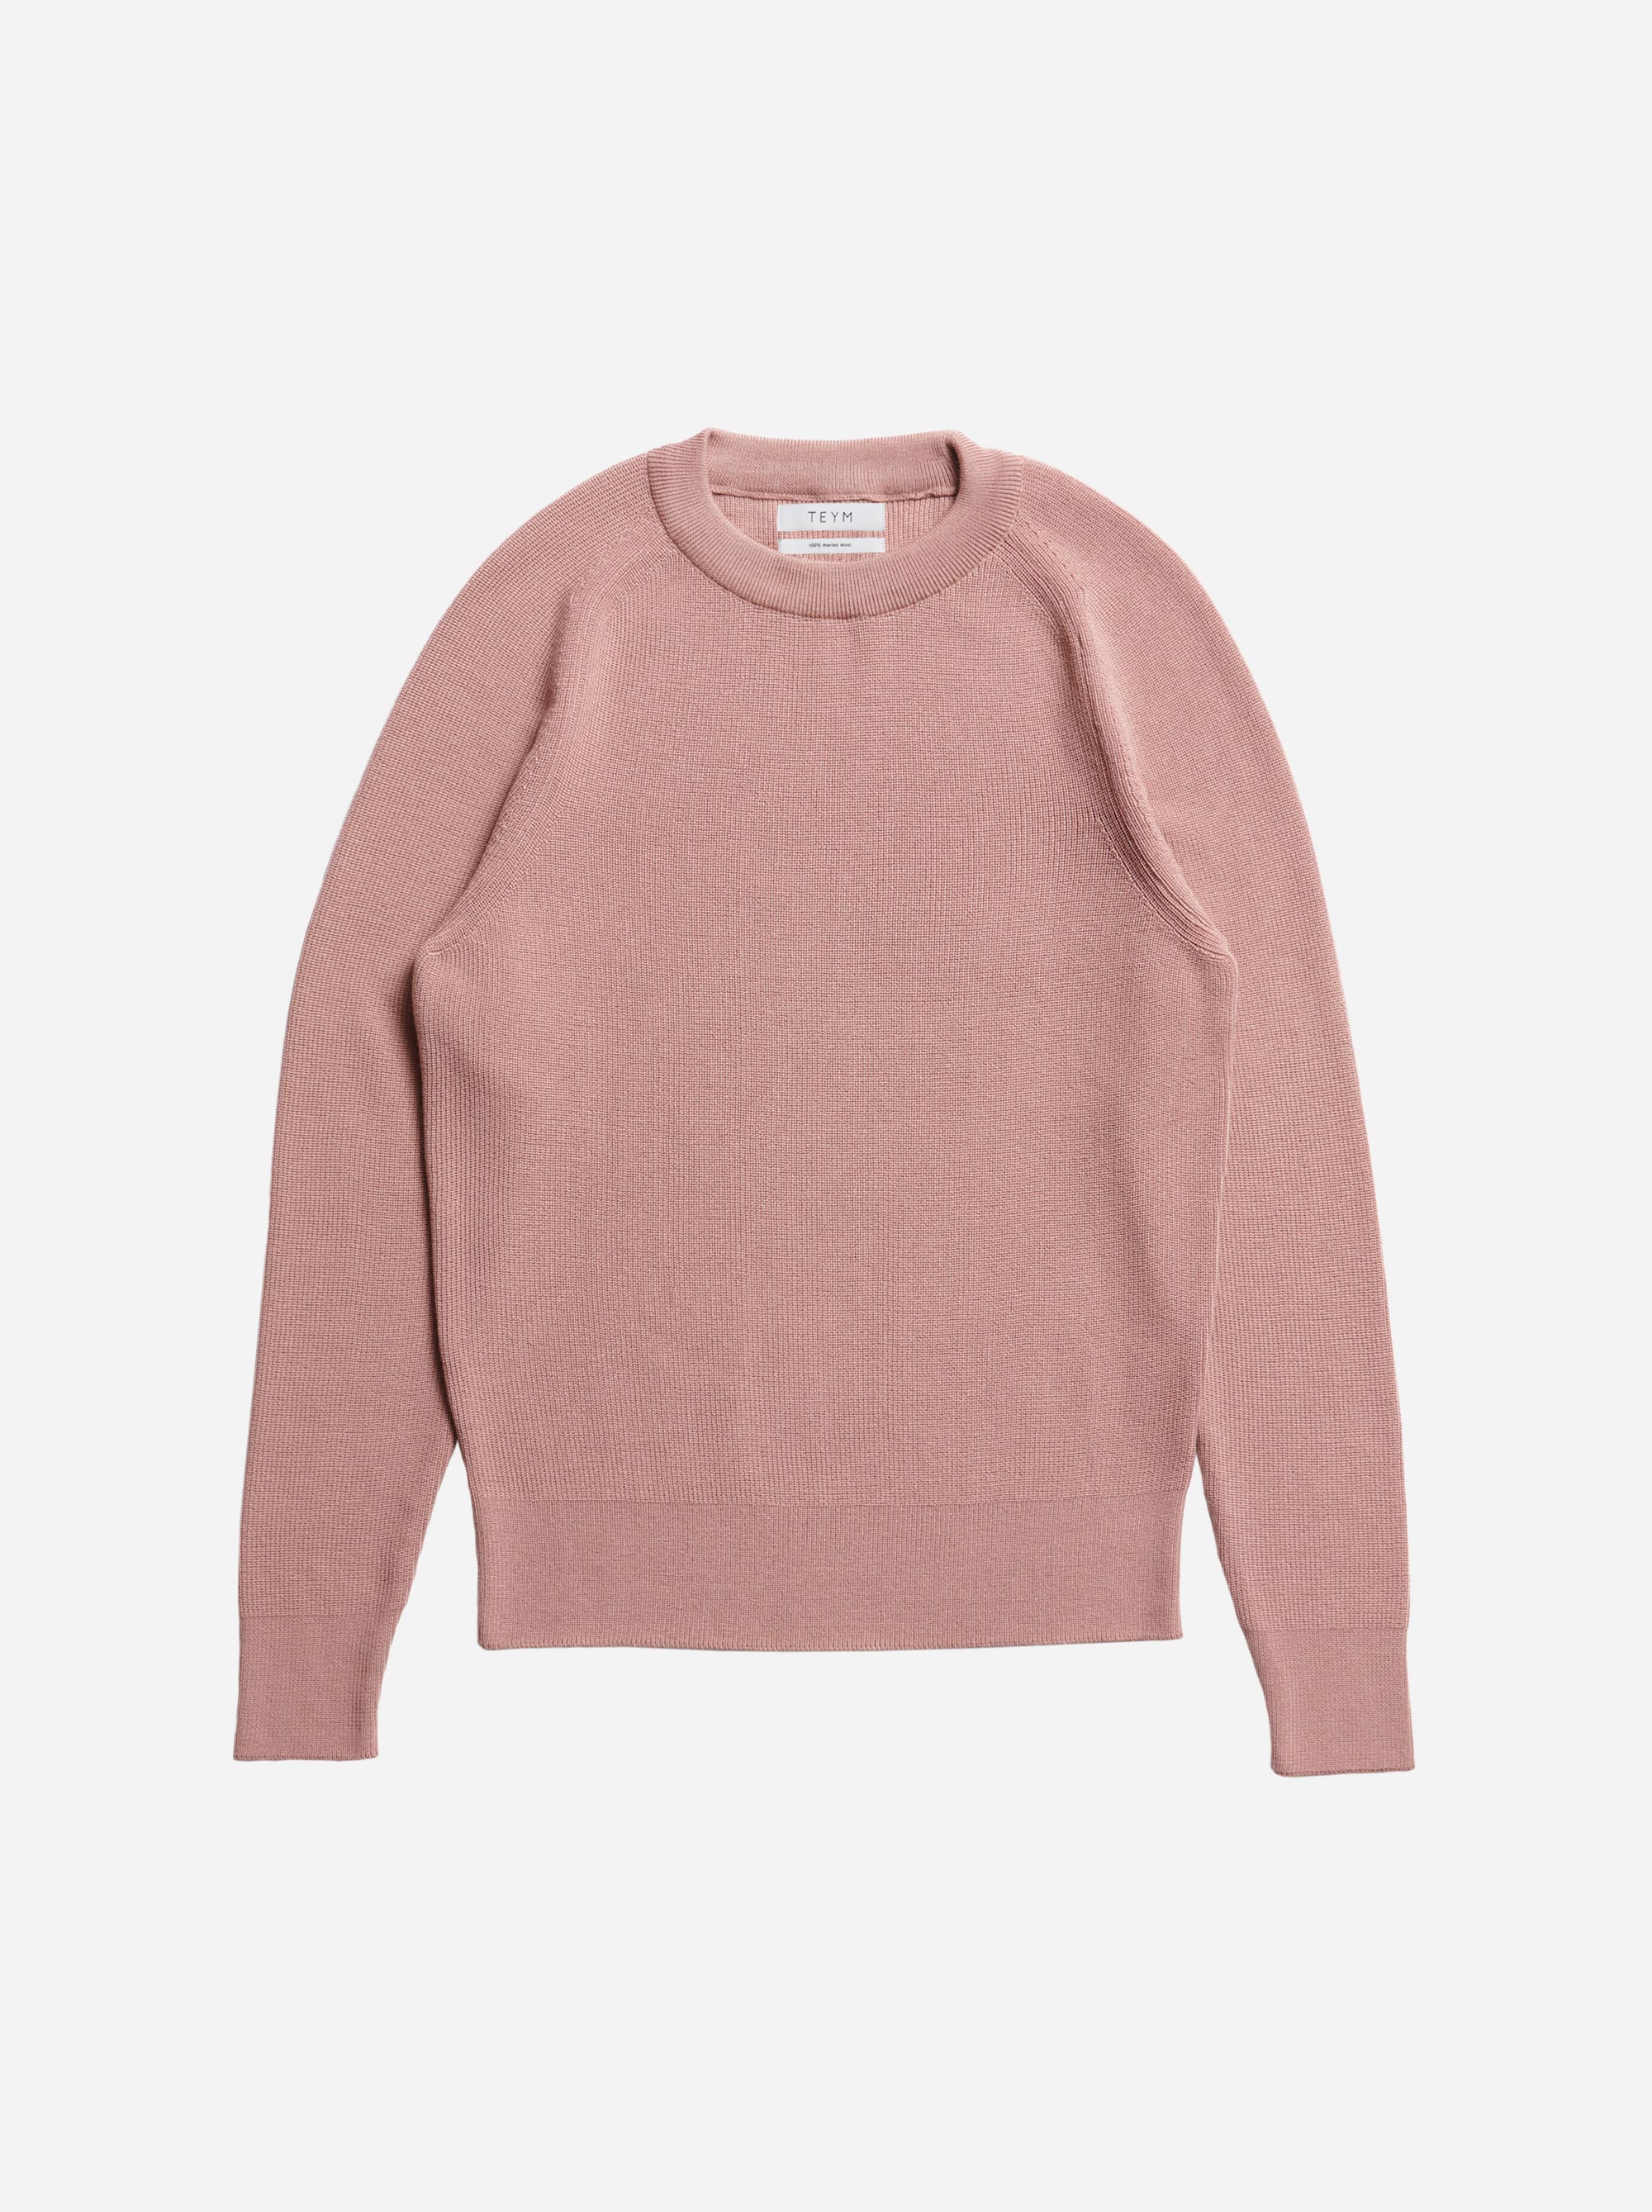 Teym - The Merino Sweater - Men - Pink - 5